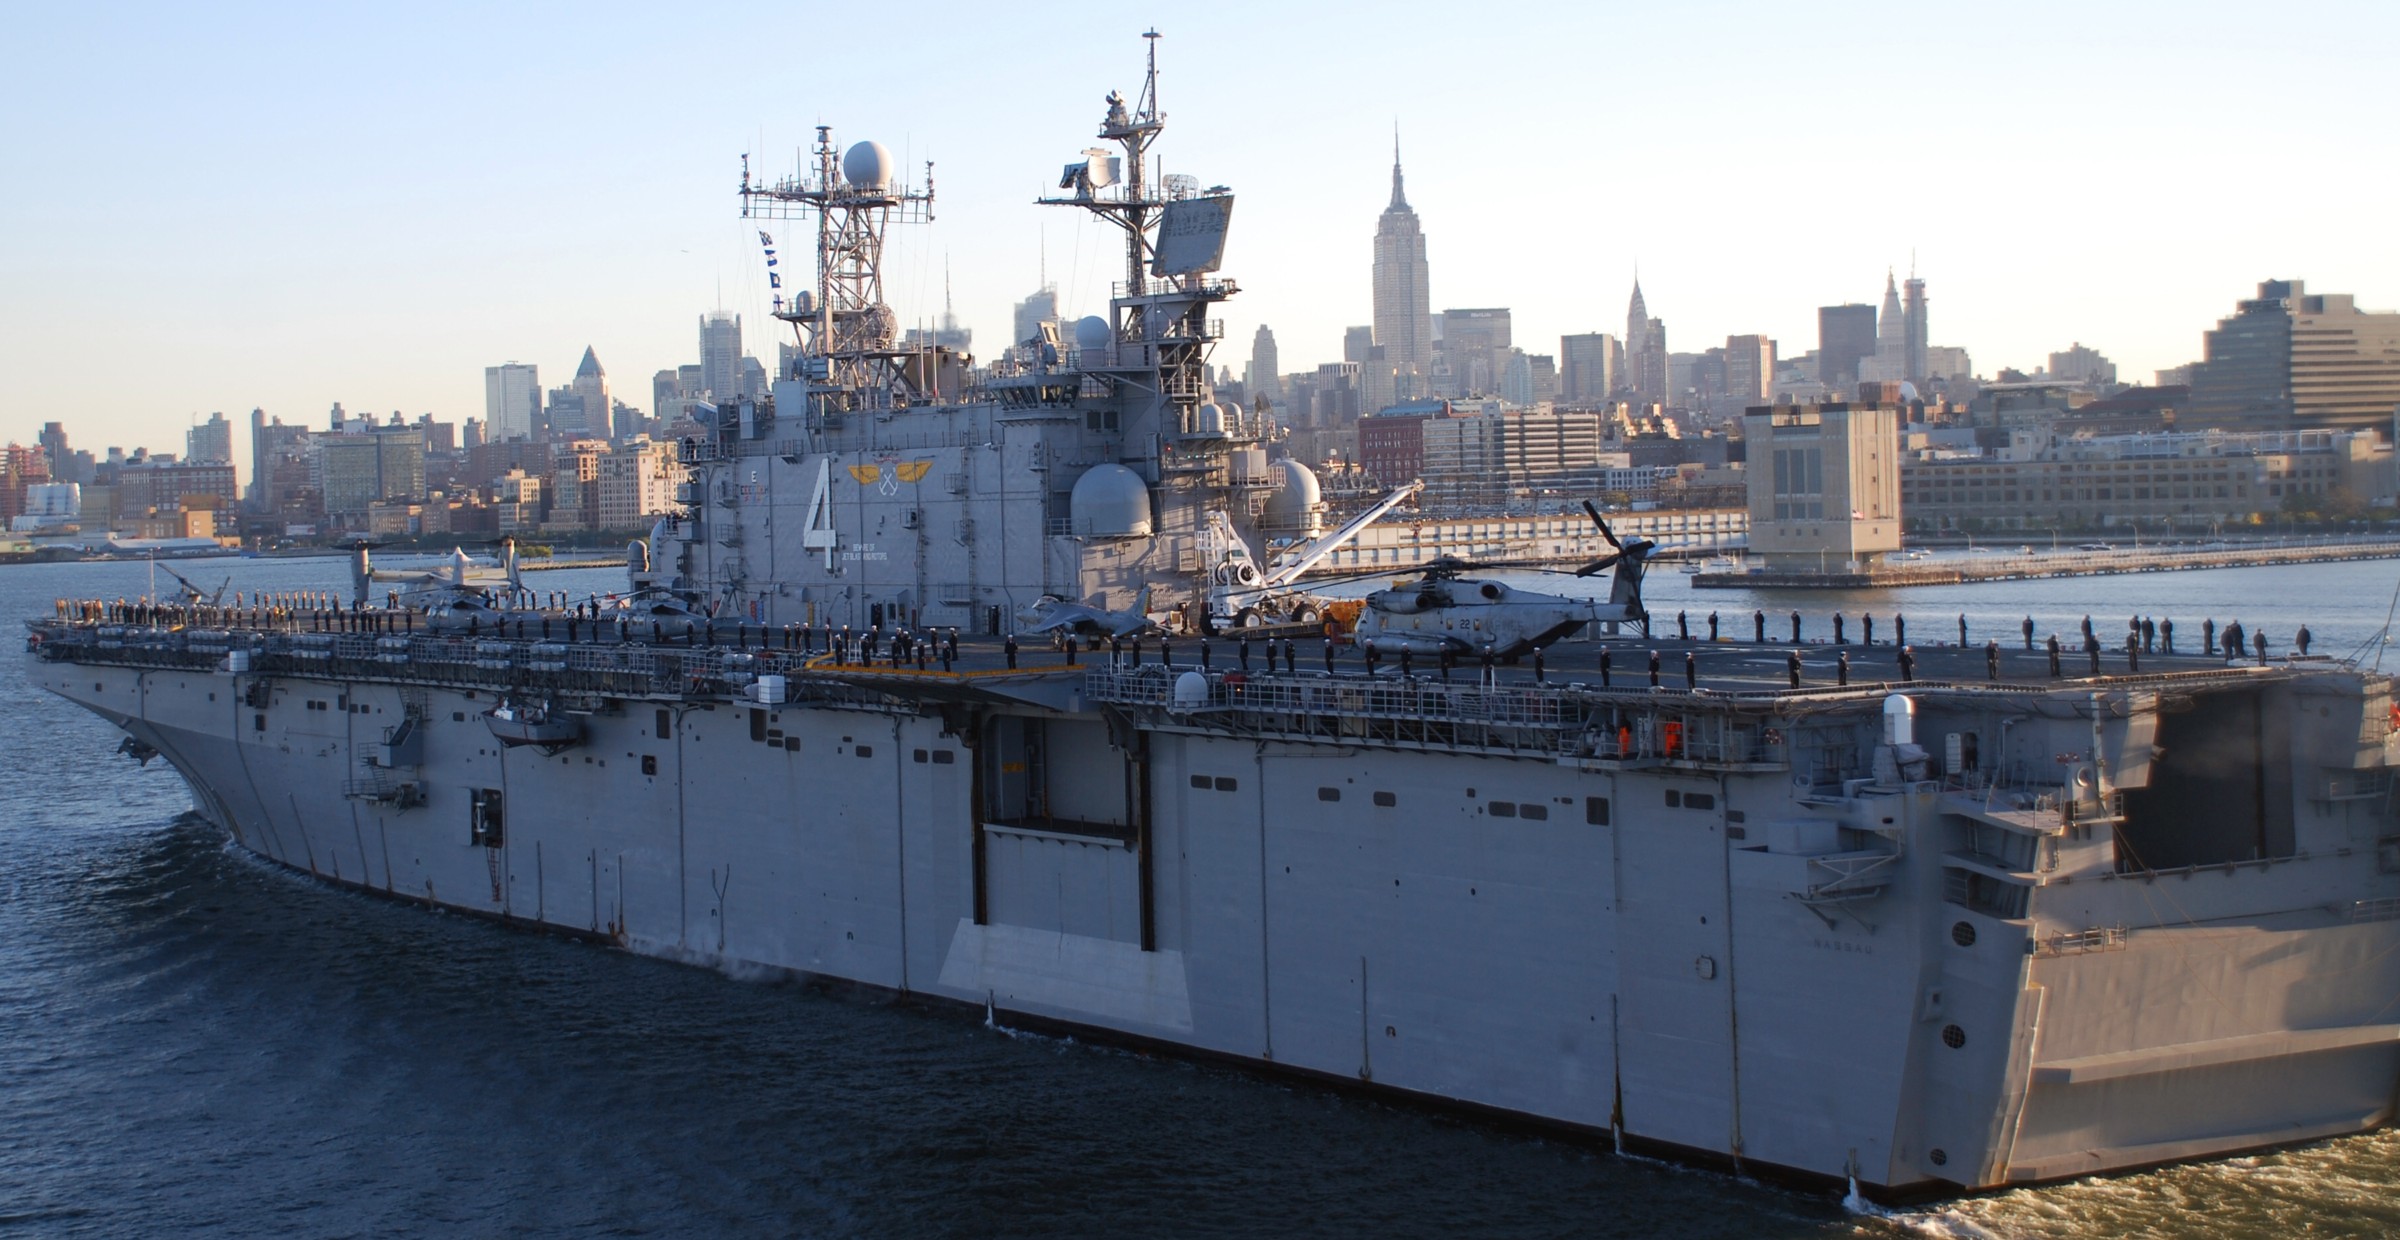 lha-4 uss nassau tarawa class amphibious assault ship us navy 41 new york city